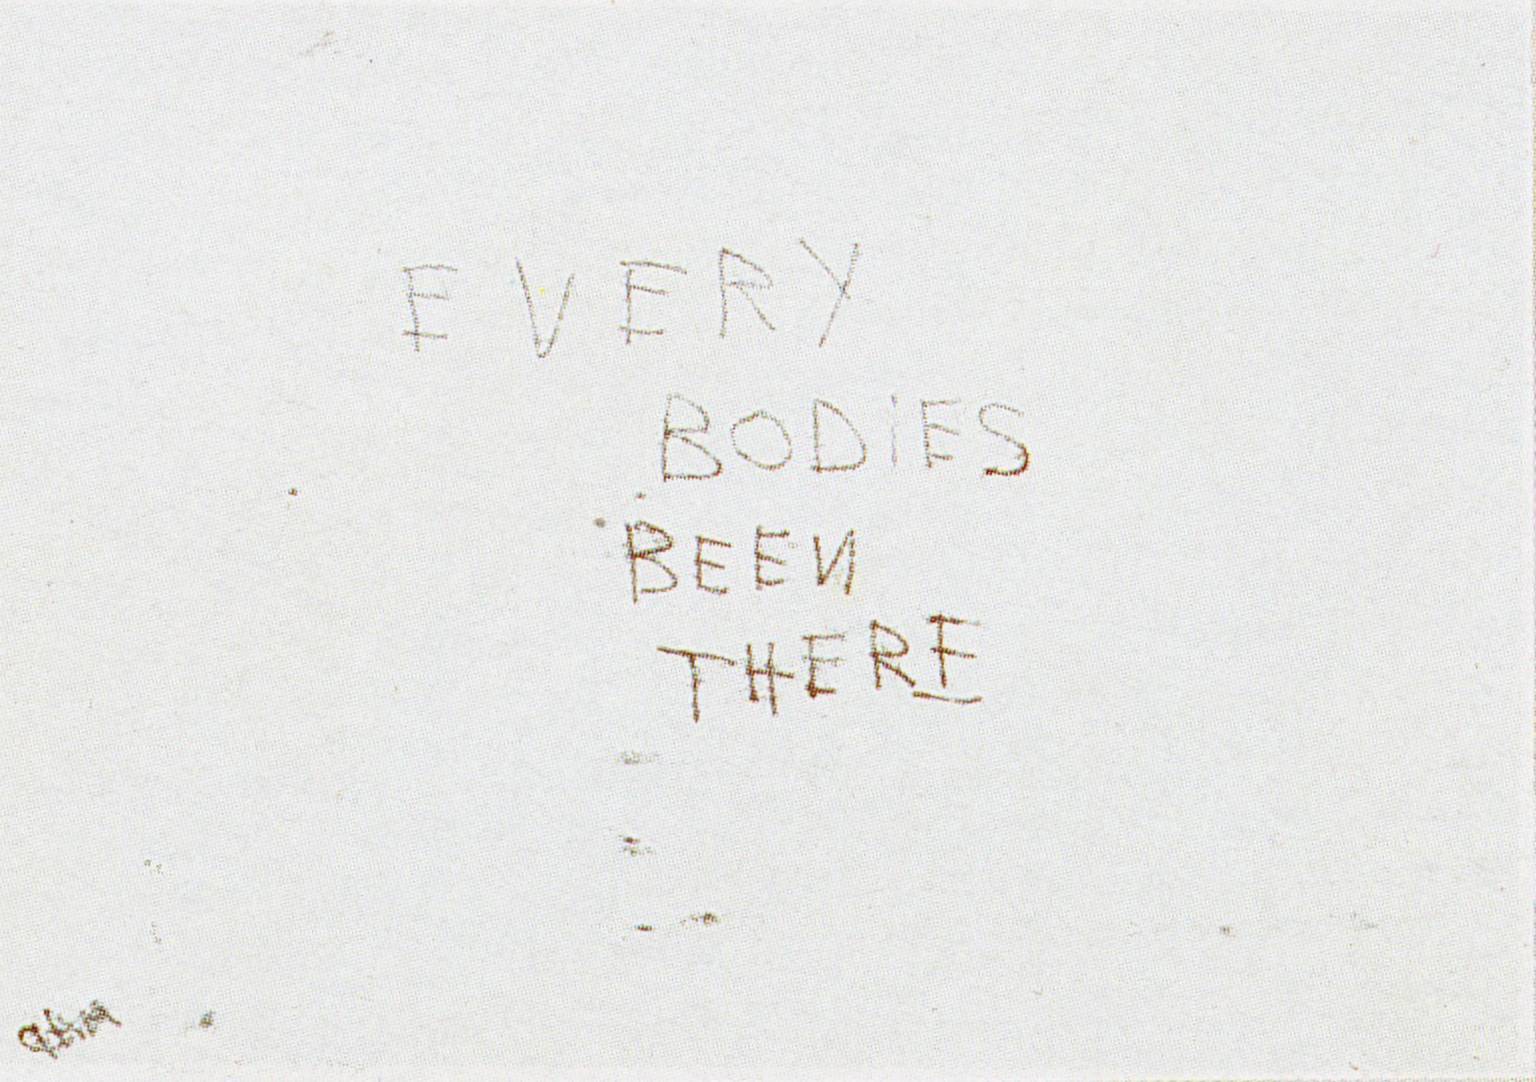 Everybodies been there von Tracey Emin (1997)